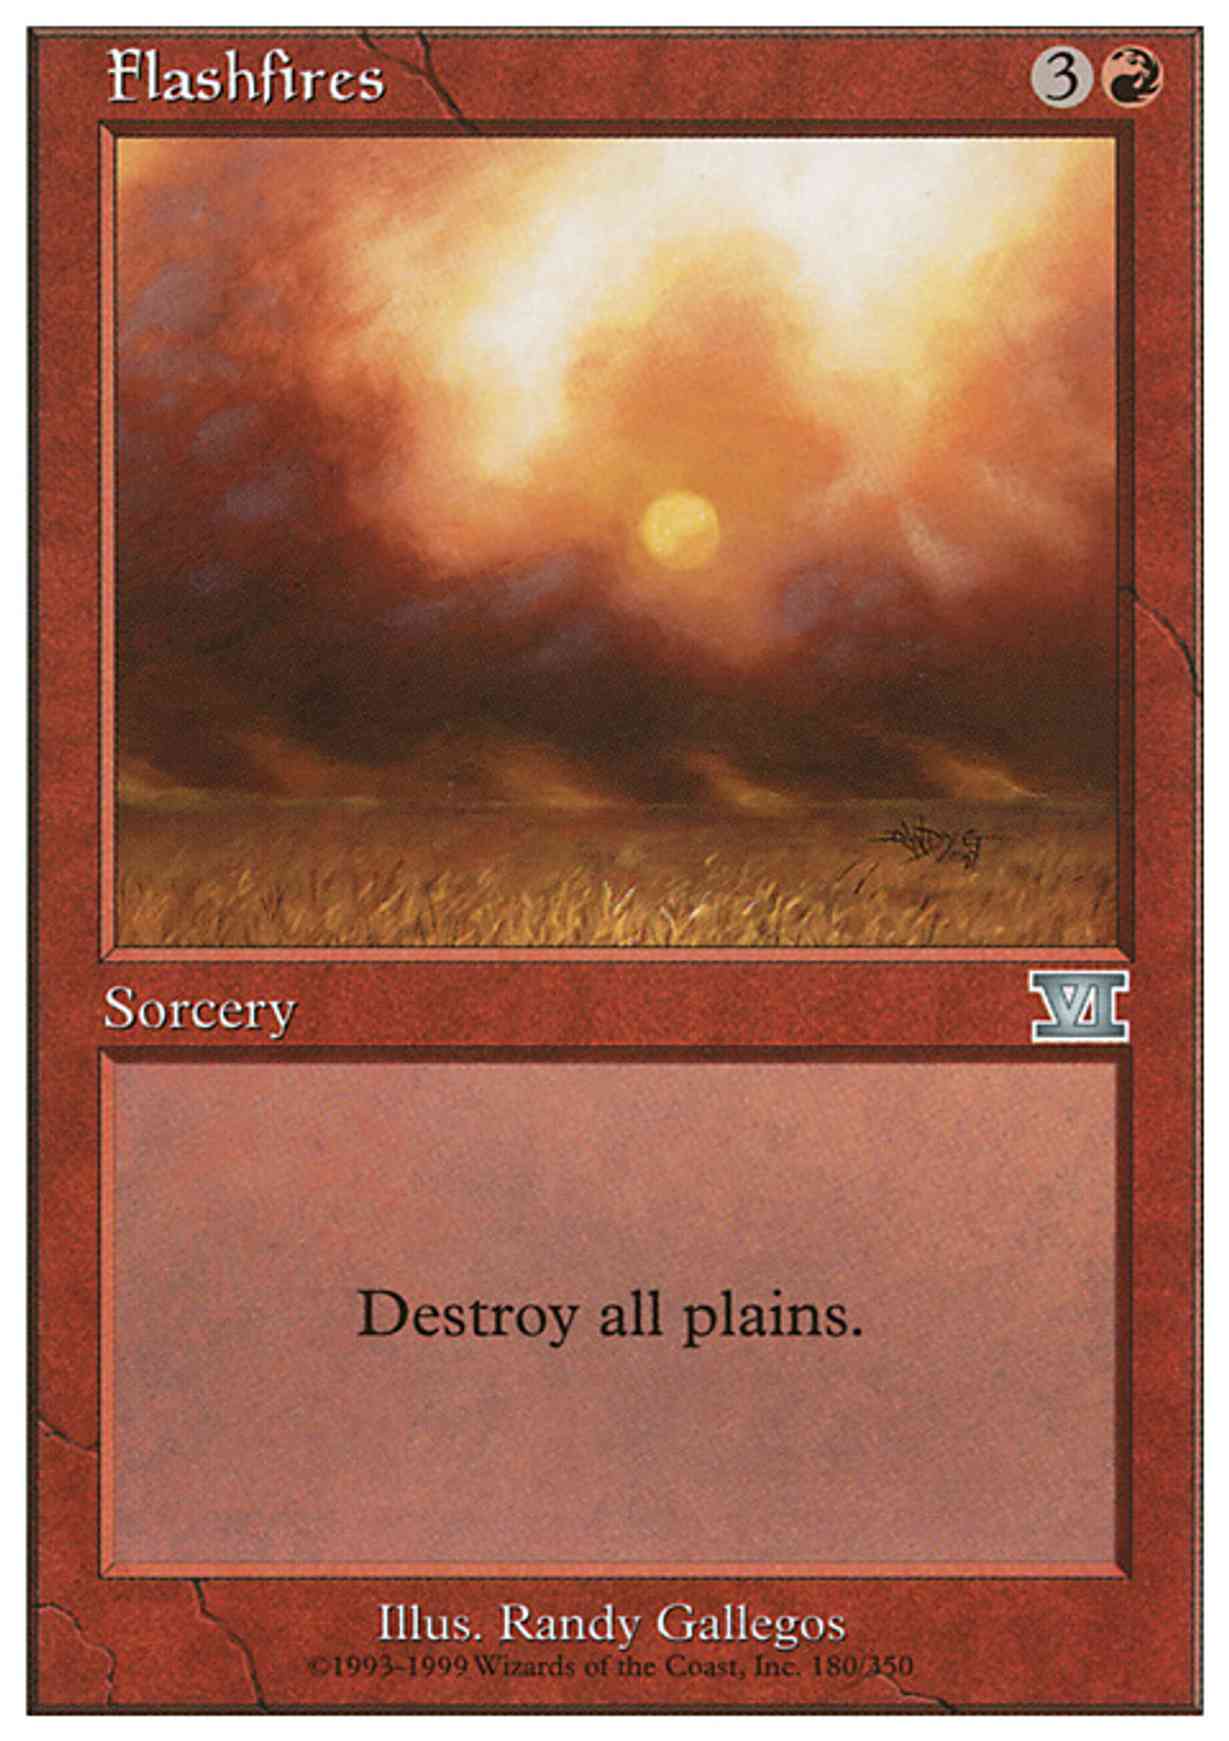 Flashfires magic card front